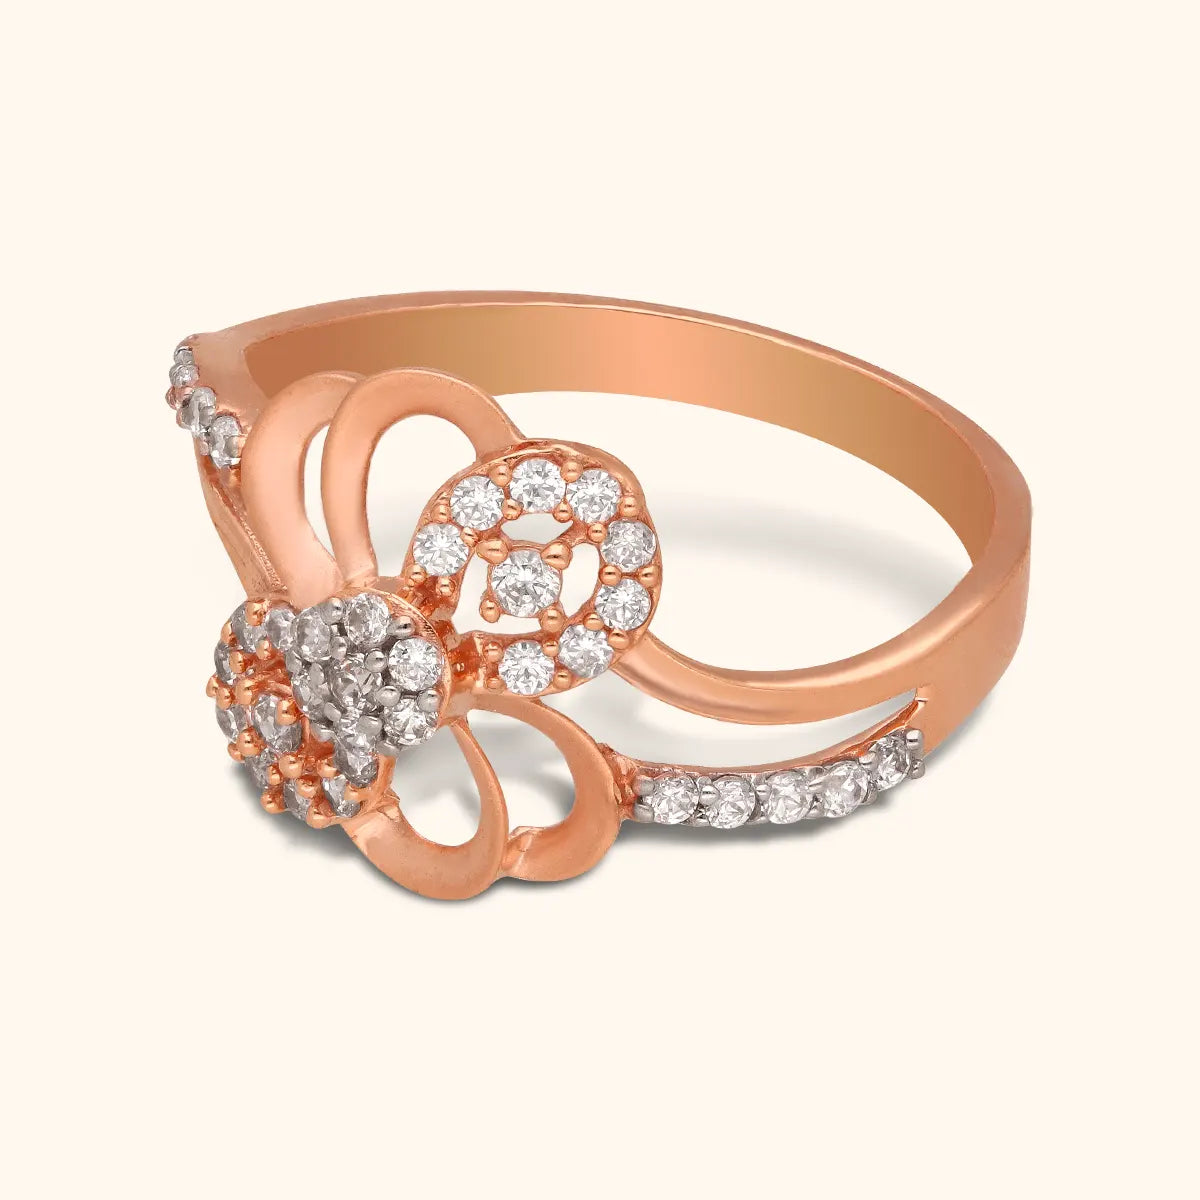 Showroom of 916 gold cz elegant design ring | Jewelxy - 166455